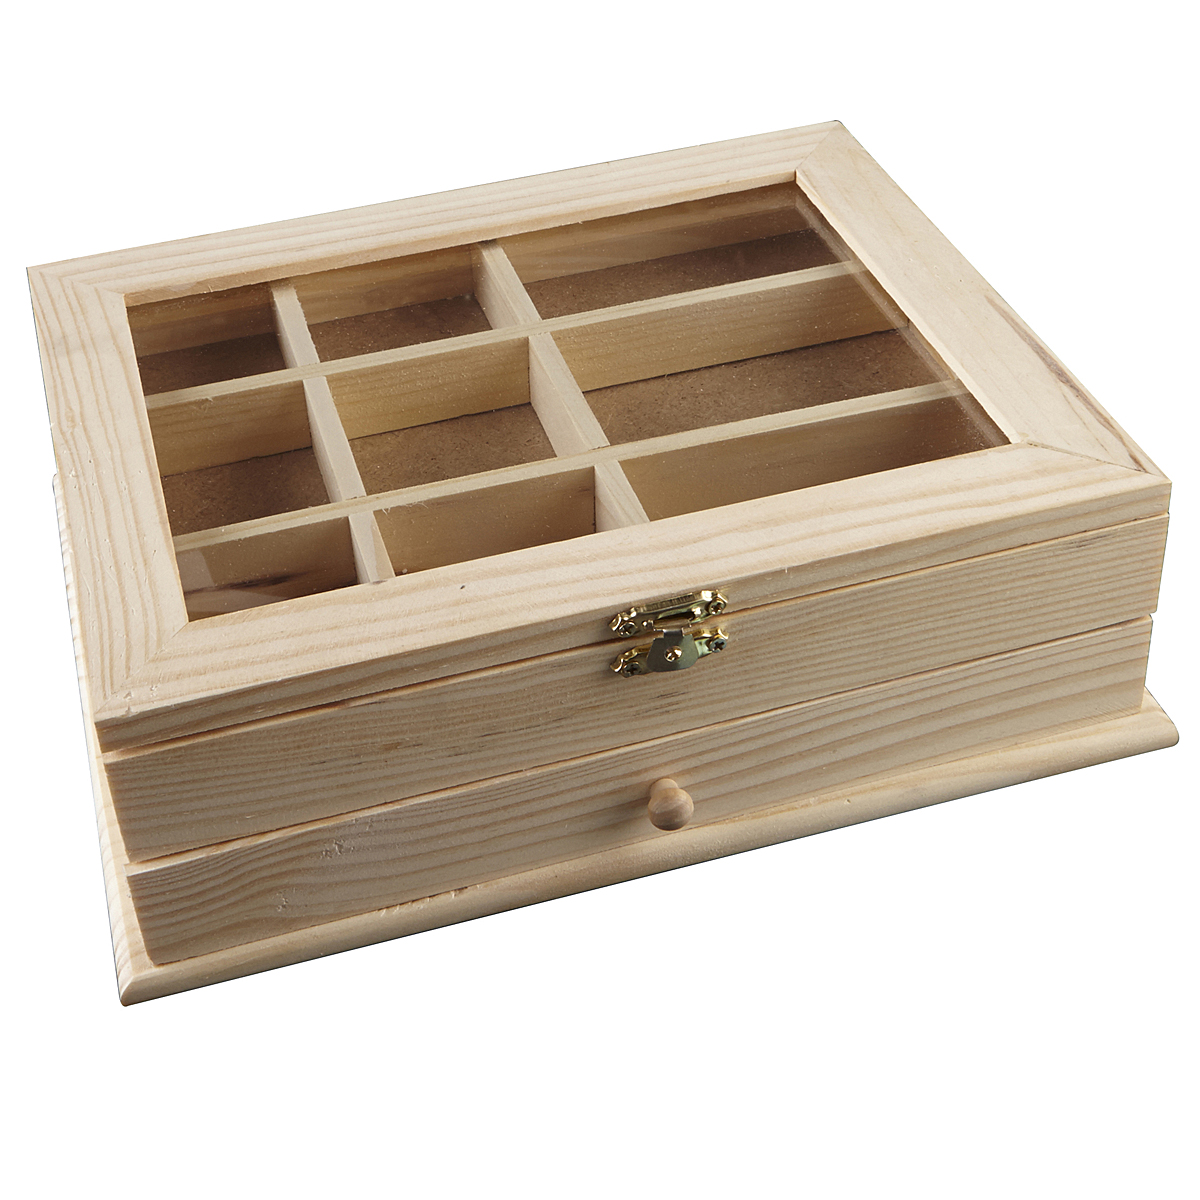 Wood Jewelry Box By ArtMinds®
